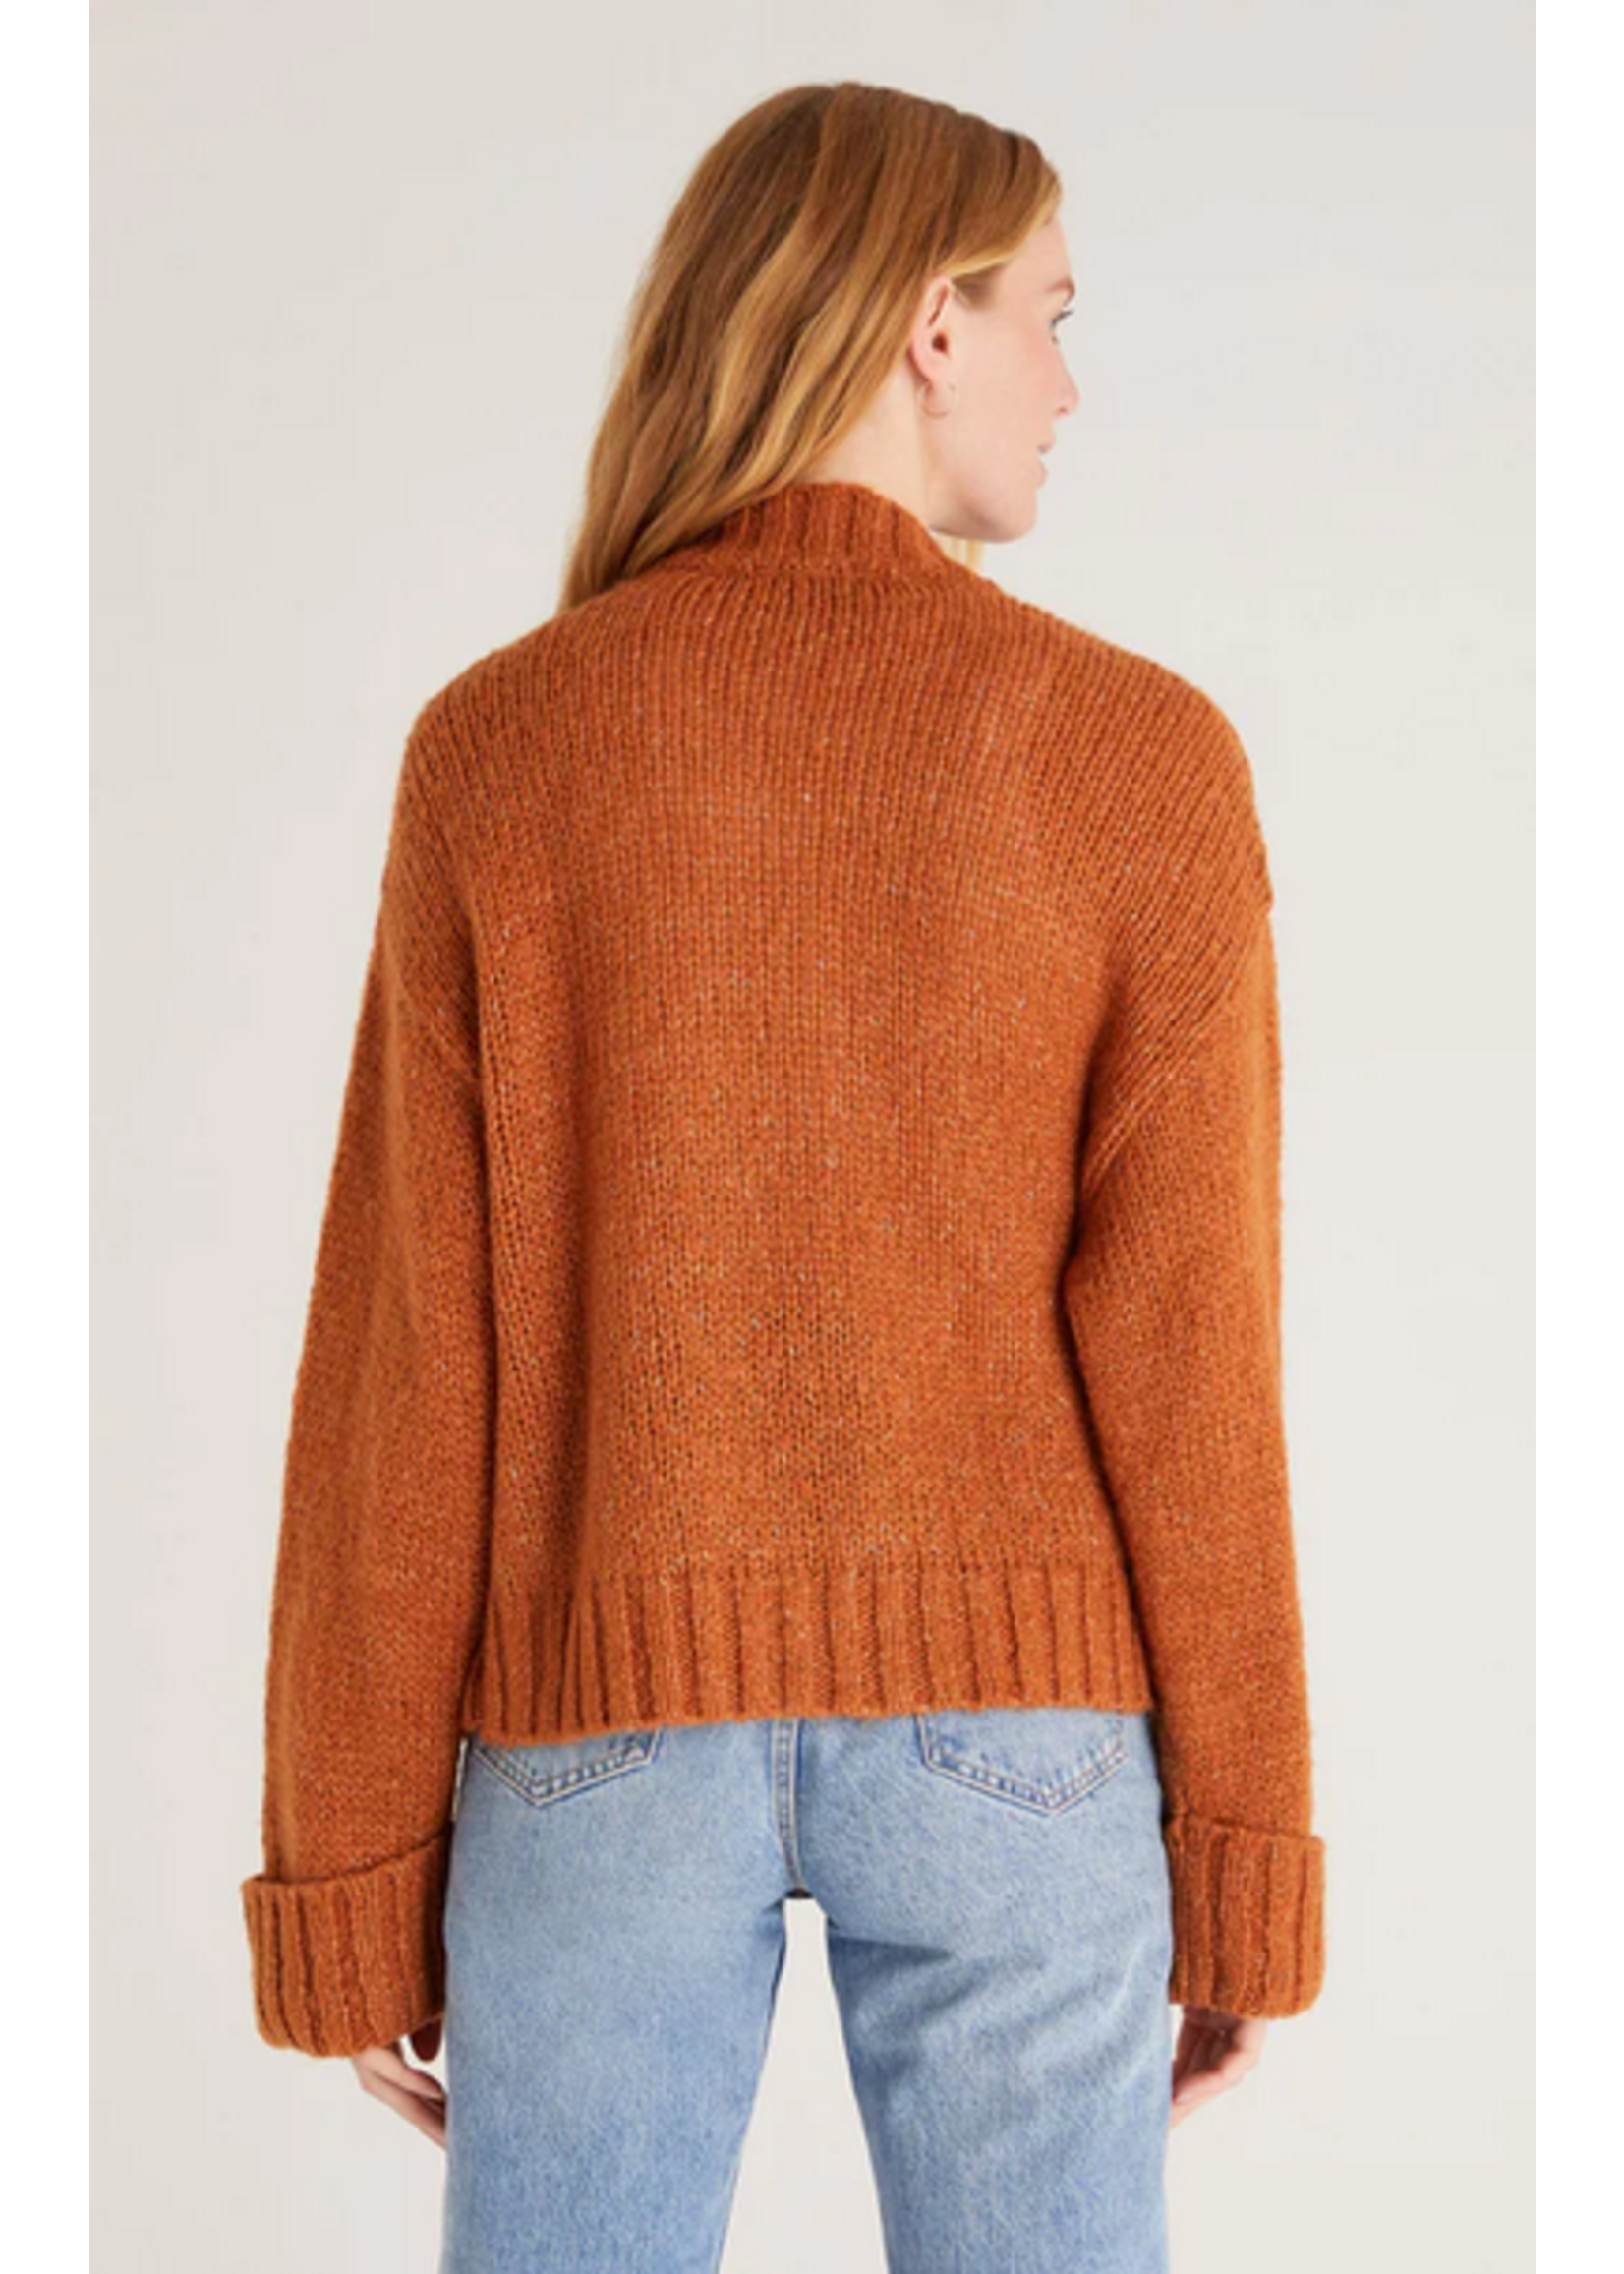 Z Supply Arti Sweater Cardigan